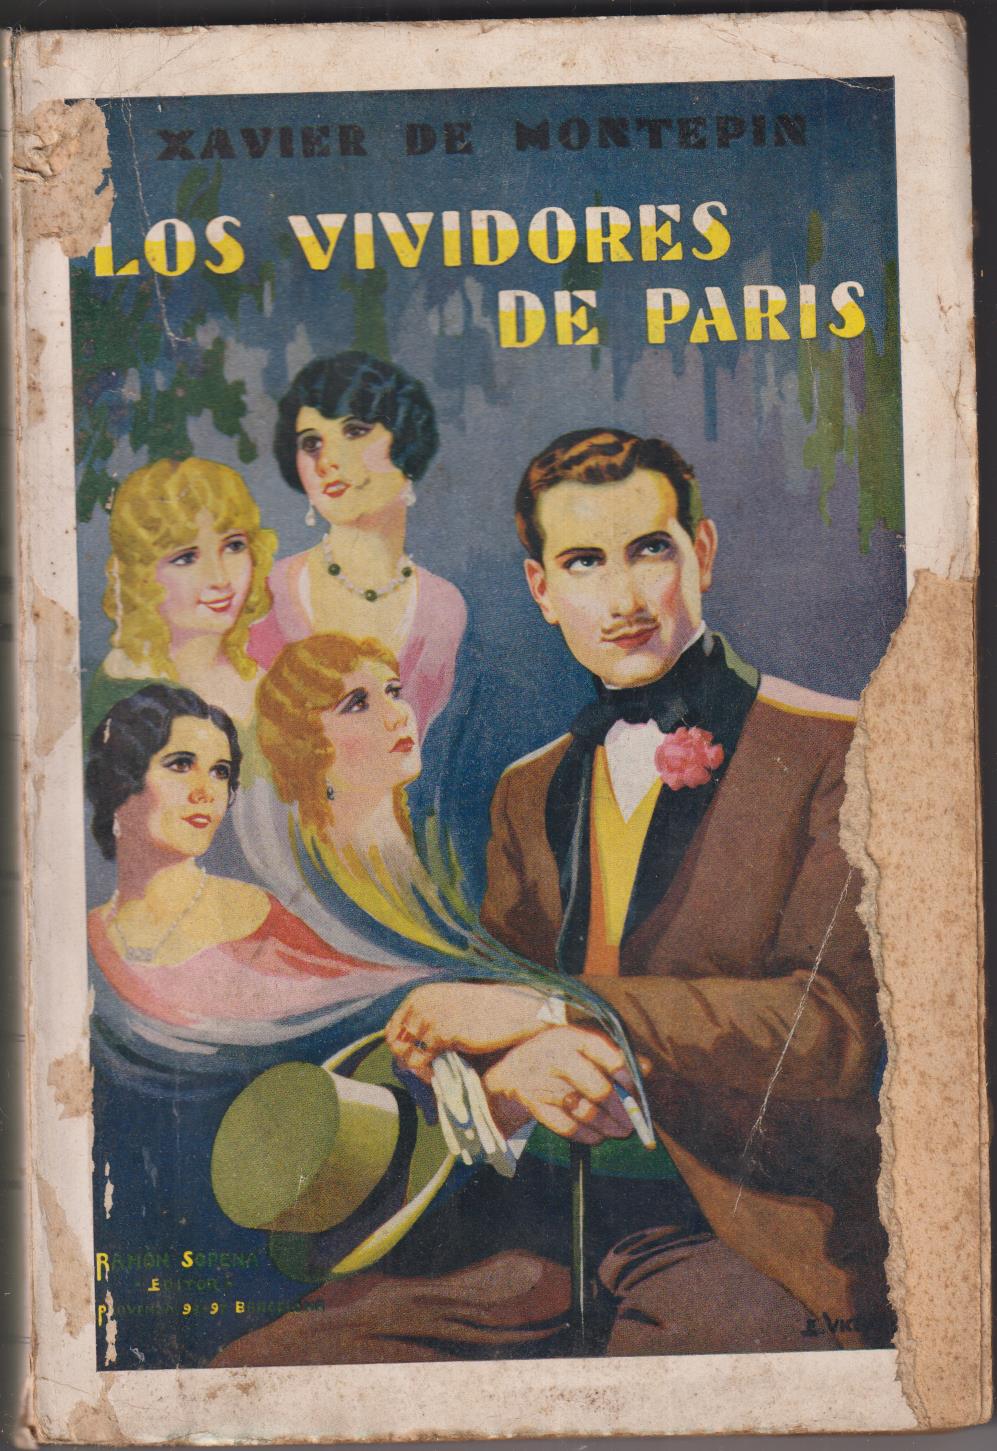 Xavier de Montépin. Los Vividores de Paris. Editorial Ramón Sopena 1931. RARO